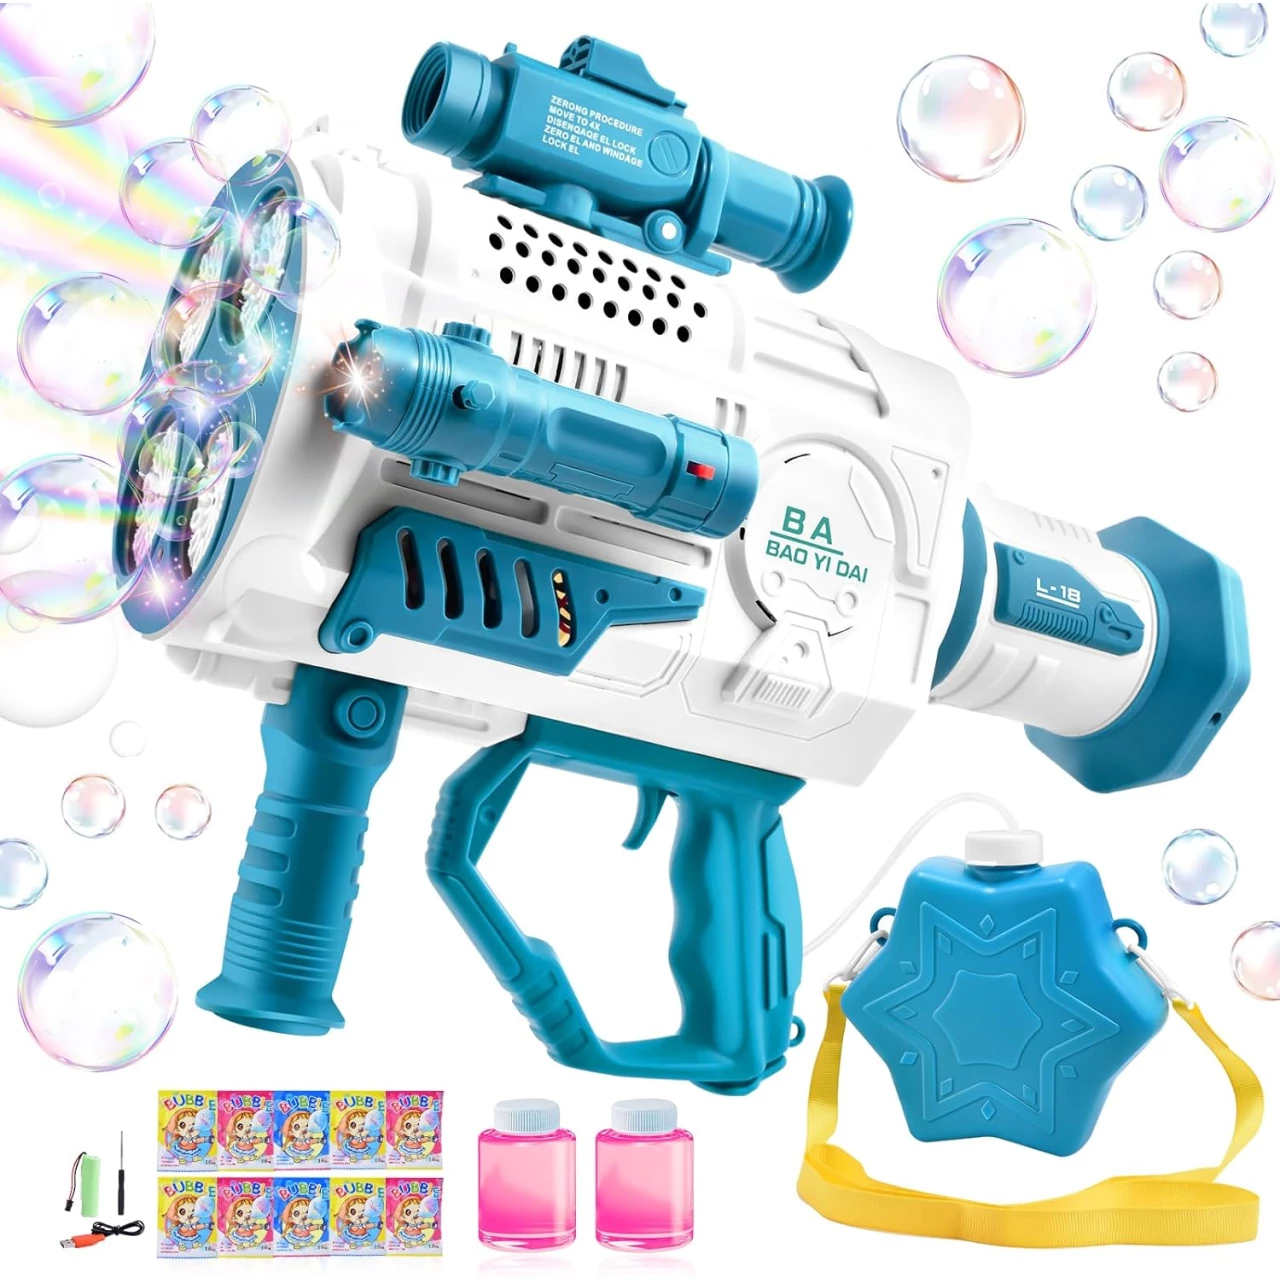 CASRRA Bazooka Bubble Gun for Kids Adults,15000 Bubbles Per Minute, 4 Motors Bubble Machine Backpack Gun,Auto Bubble Maker with LED Lights, Bubble Solution, Birthday Wedding Party Favors Outdoor Toy